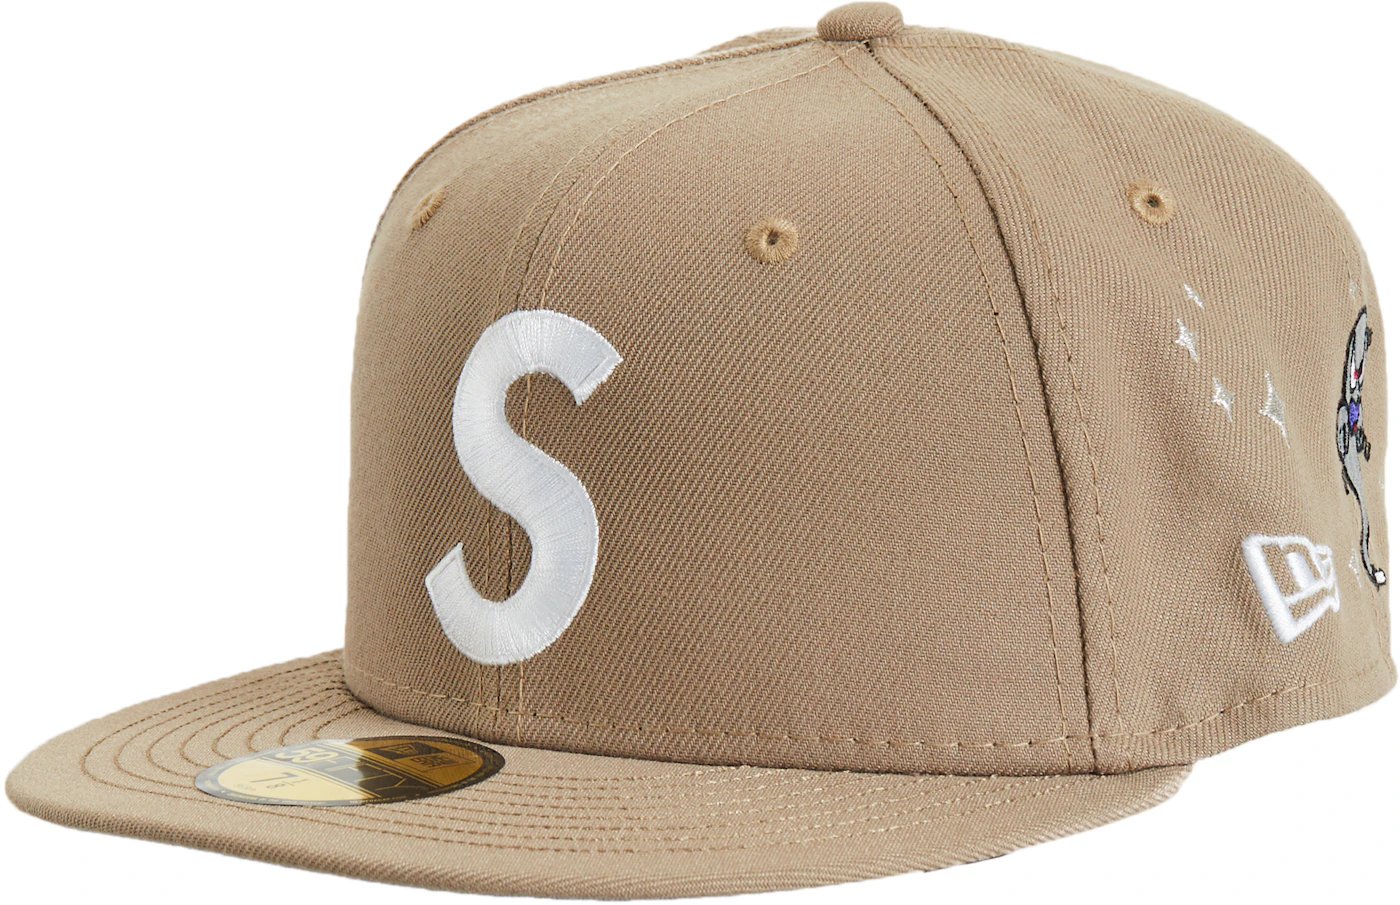 NWT 2018 Supreme SS18 Box Logo Brown Monogram New Era Hat S 7 3/4 Rare  AUTHENTIC